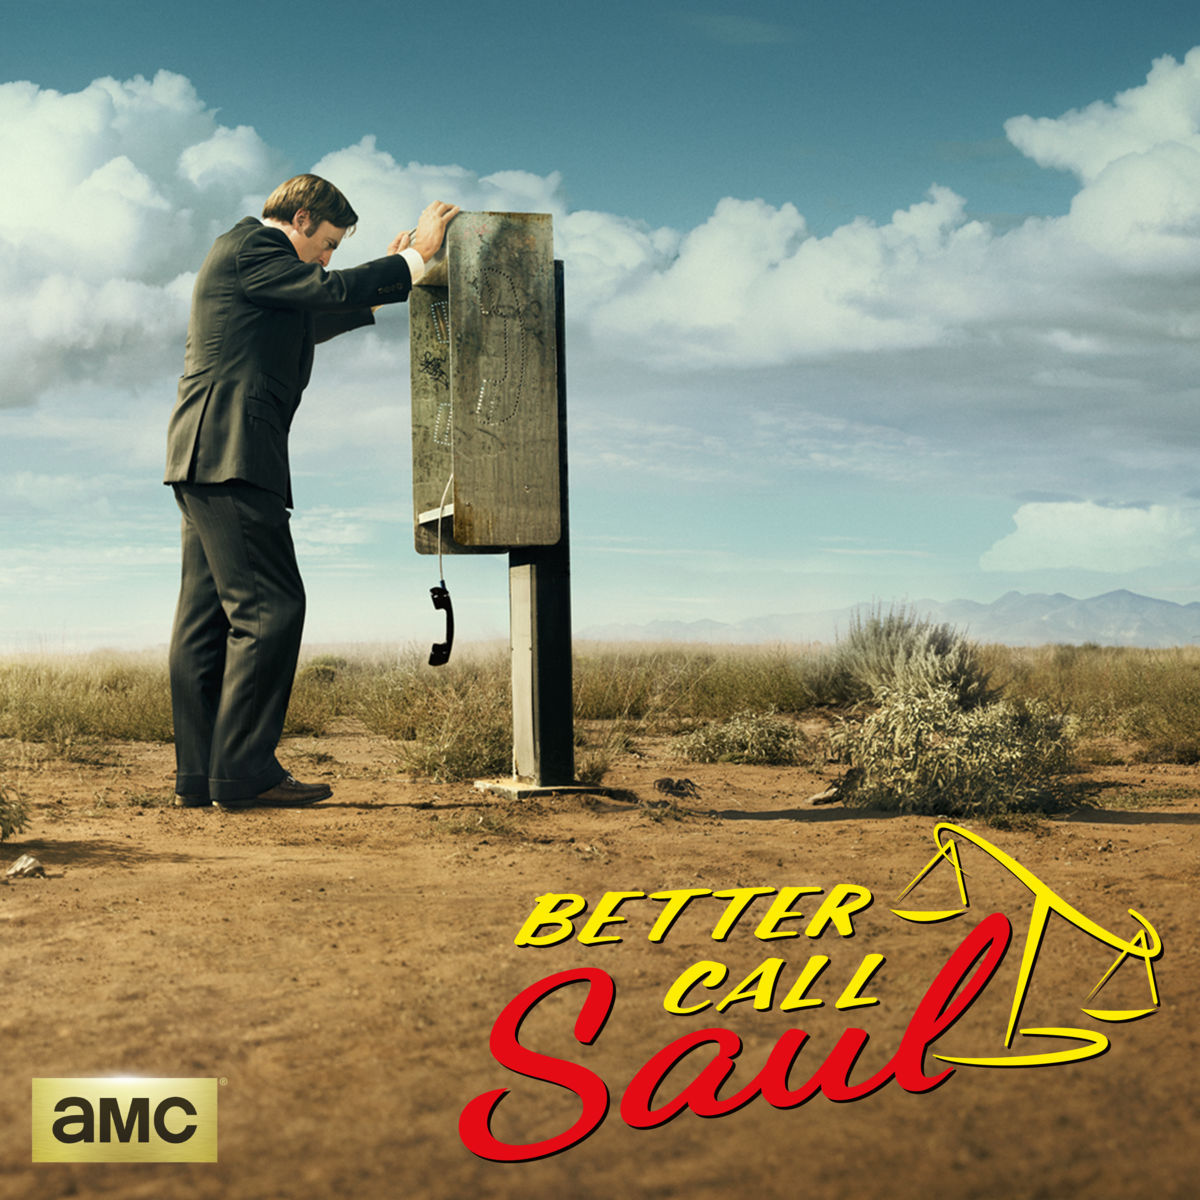 Better Call Saul, Season 1